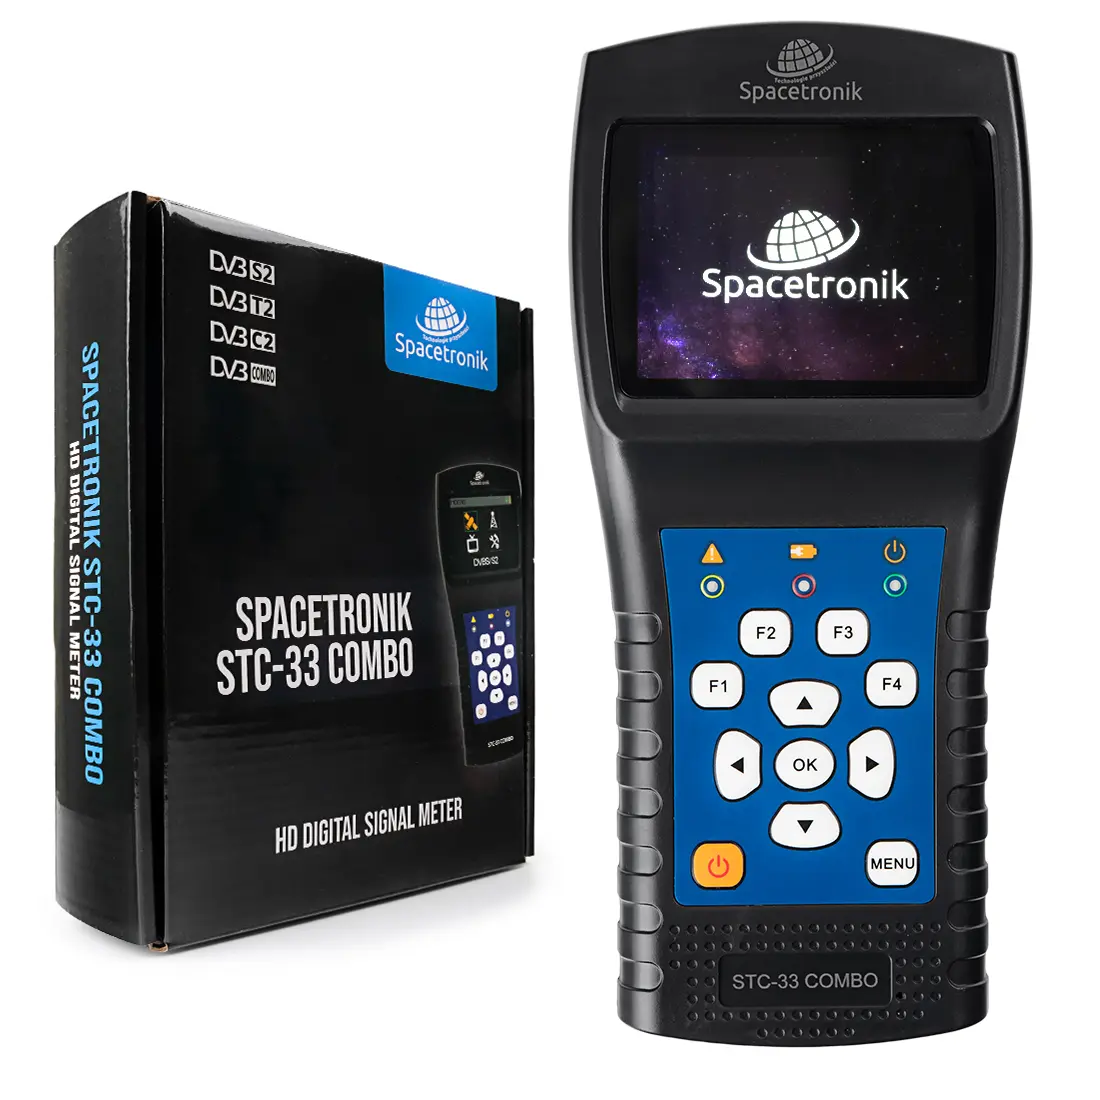 Miernik sygnału Spacetronik STC-33 Combo DVB-S2+T2/C